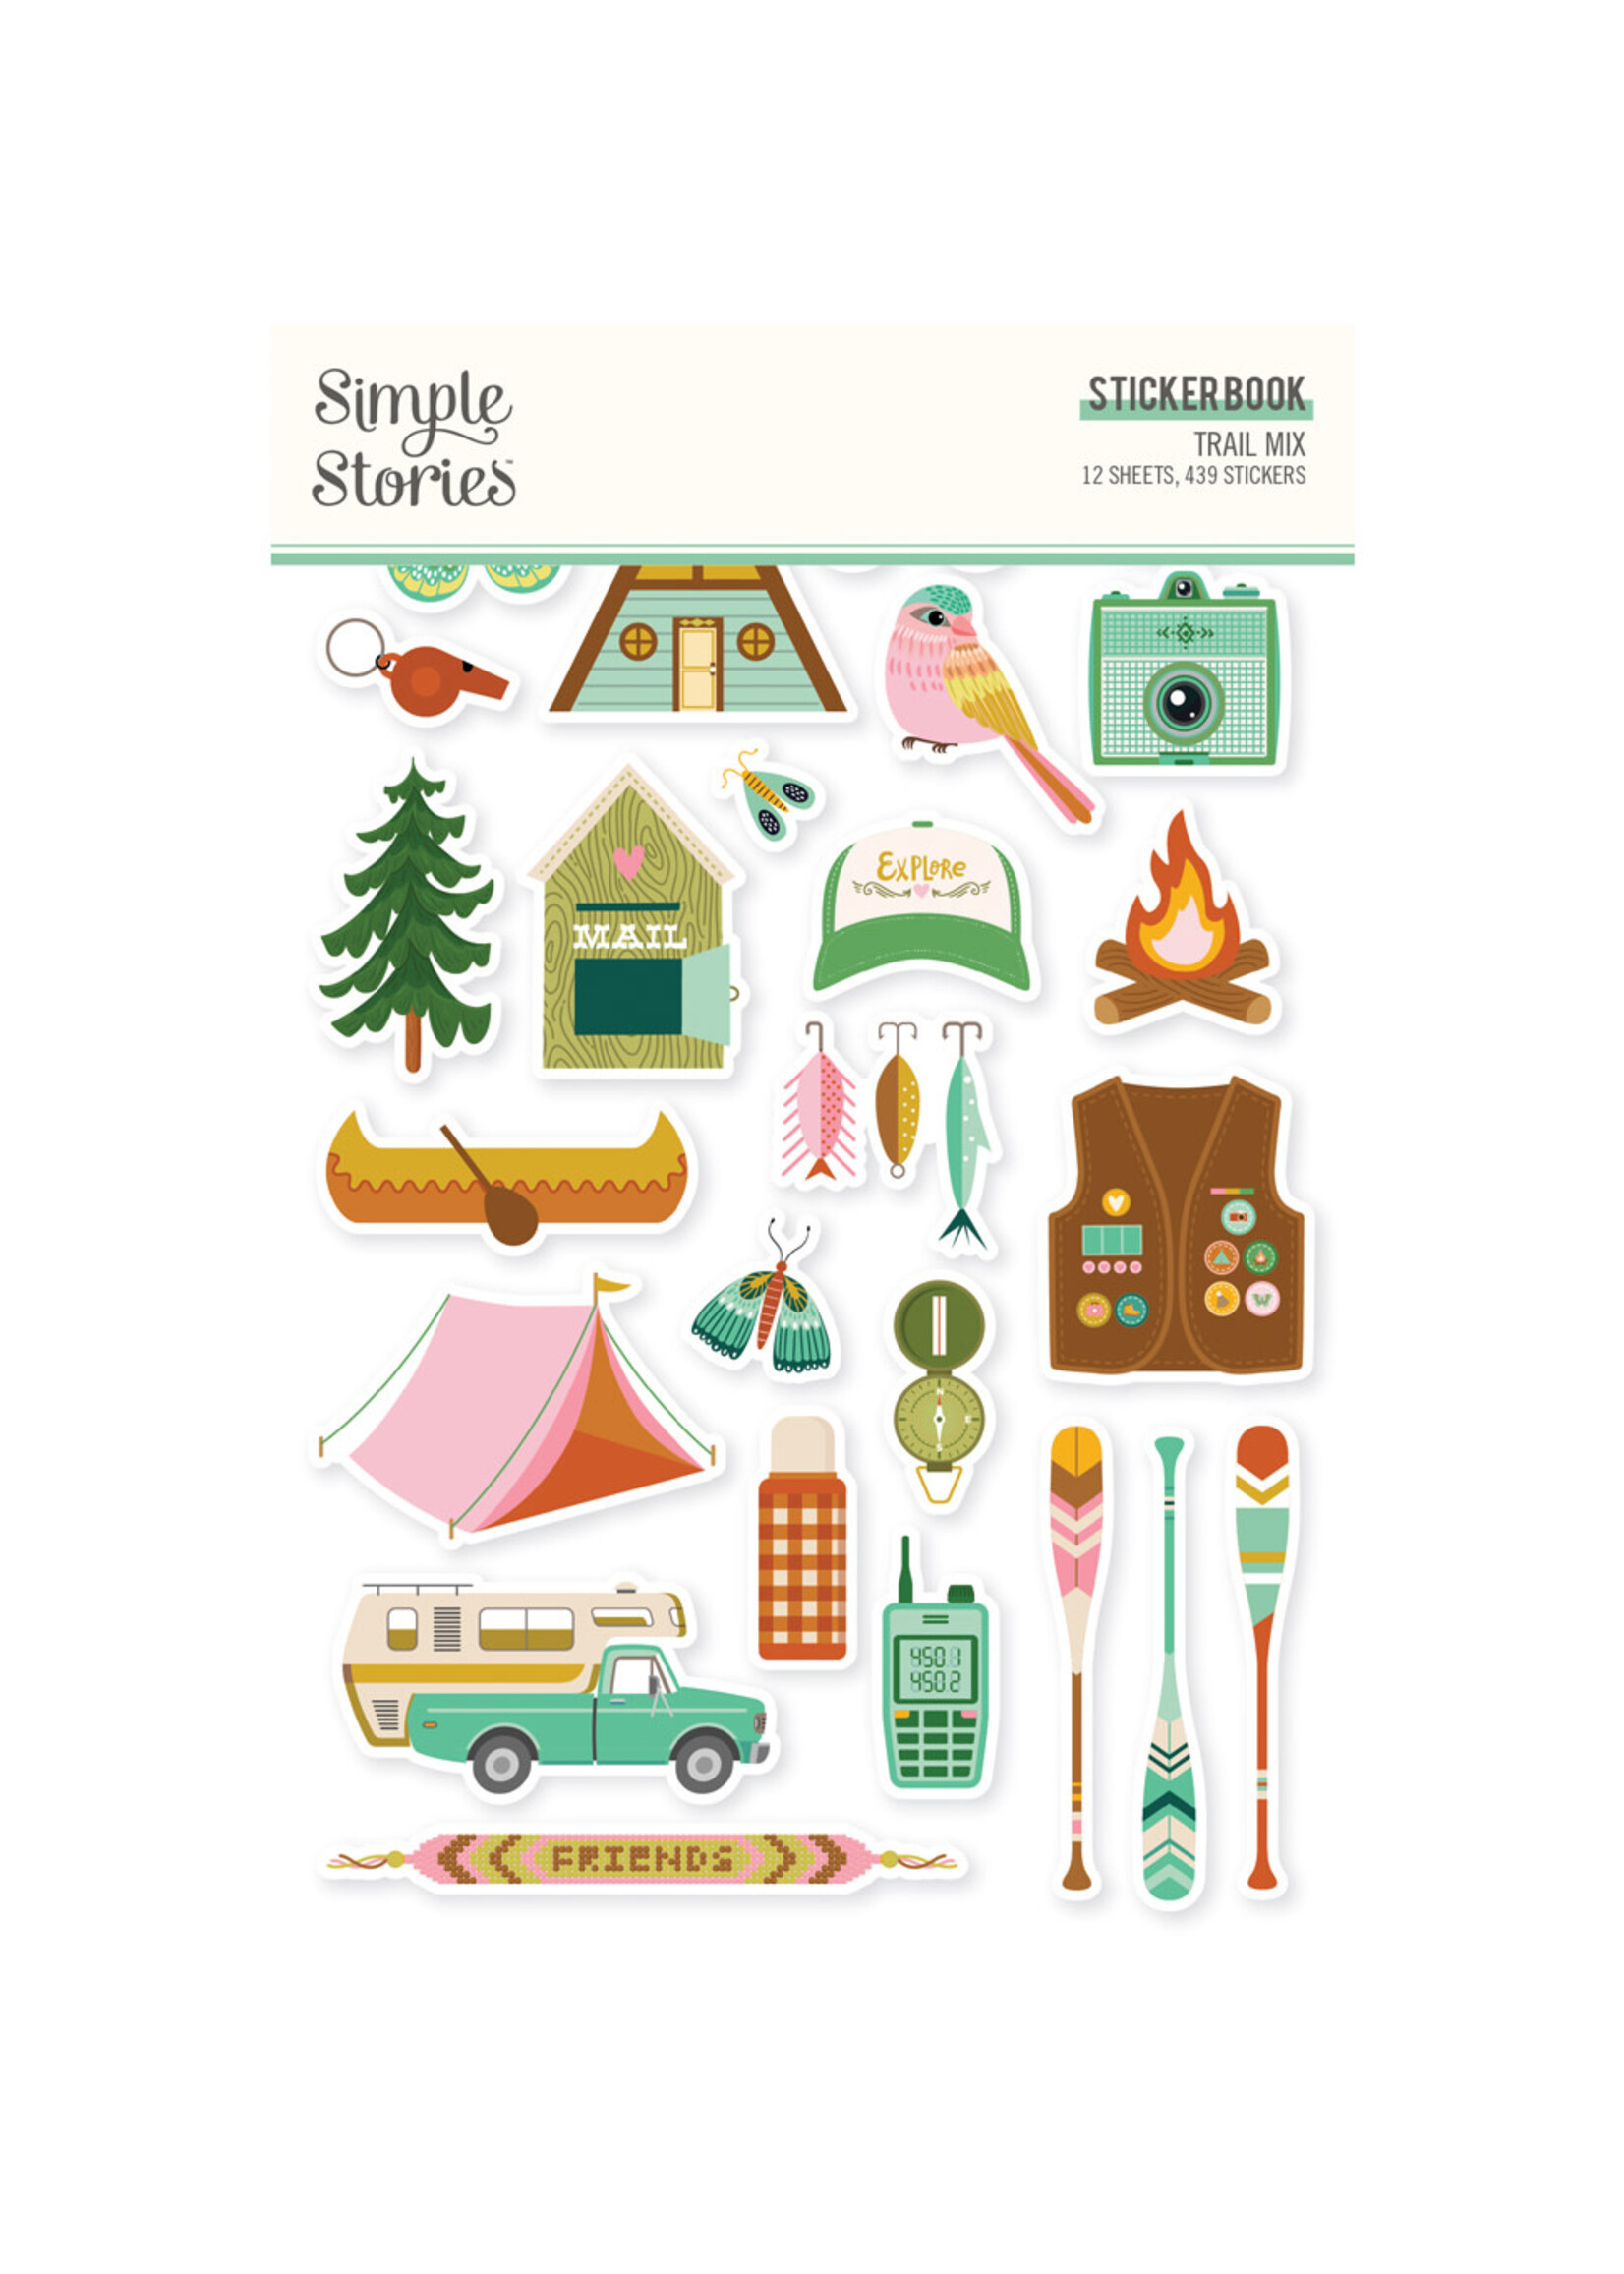 Simple Stories Trail Mix - Sticker Book